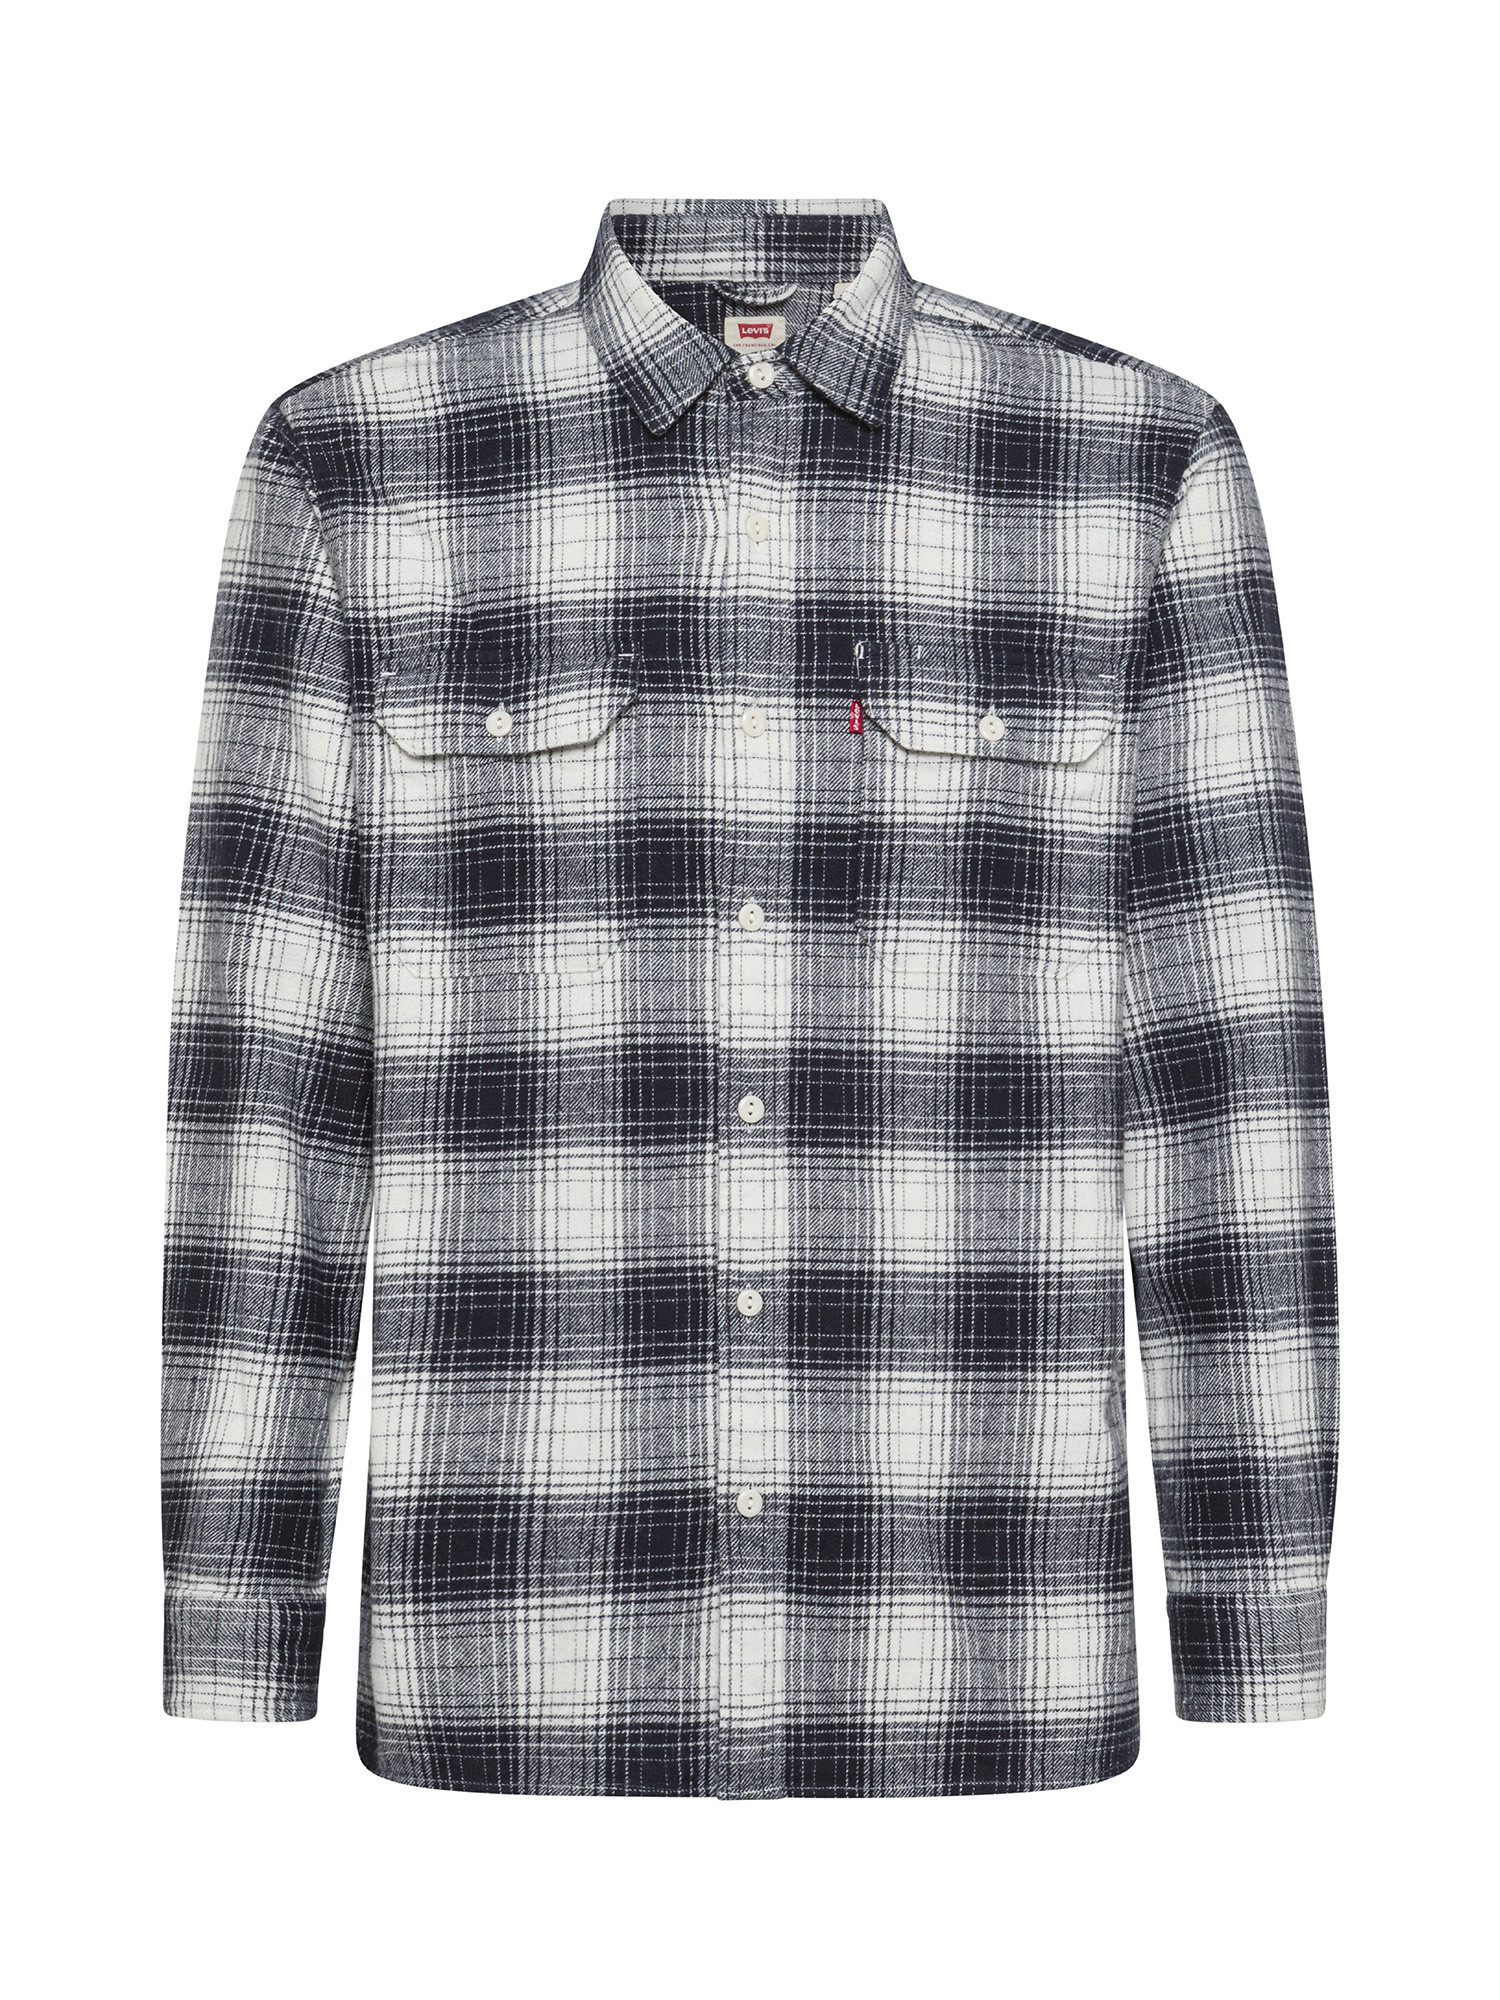 Levi's - Check shirt, Black, large image number 0